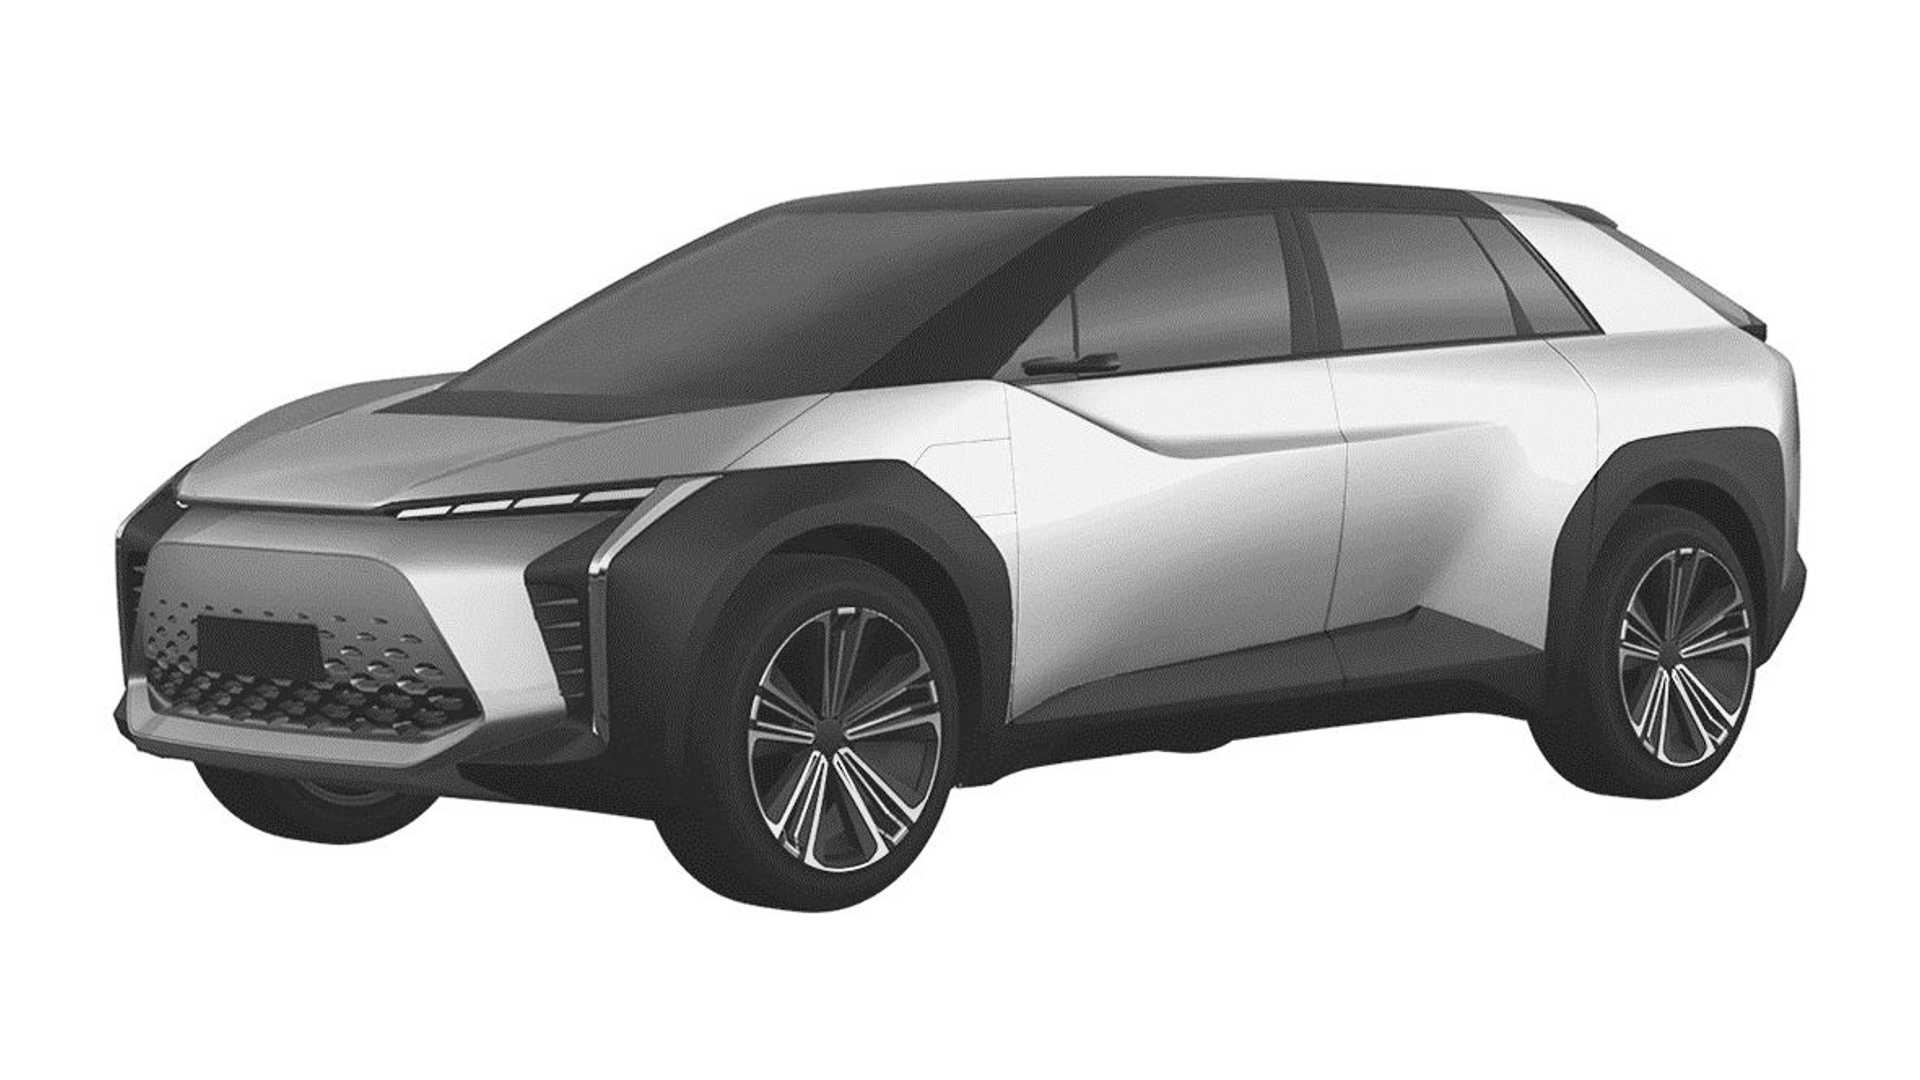 Toyotaミドルクラスの電動suvを上海モーターショー21で発表予定 Eco Drive Auto Sales Leasing